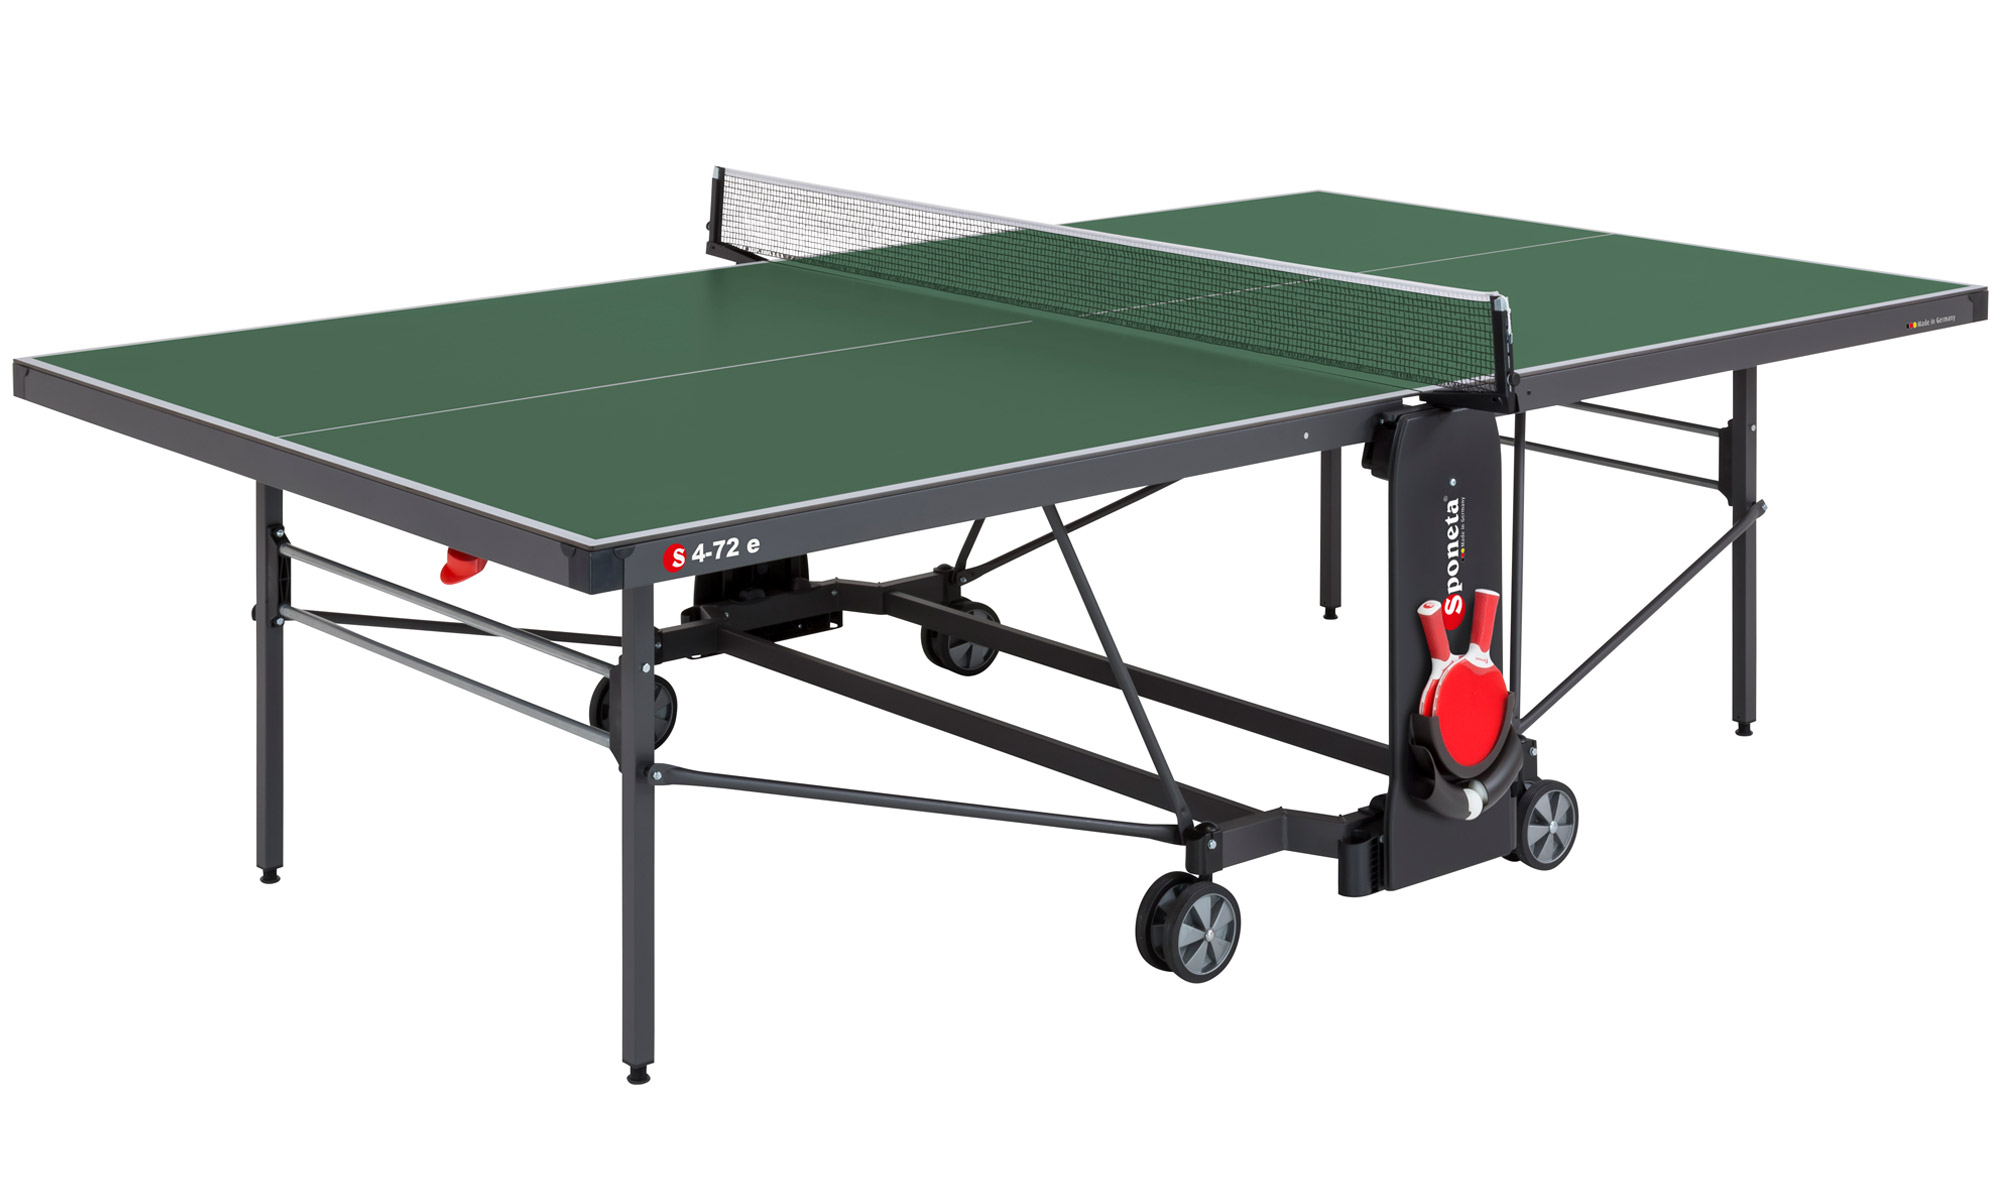 Sponeta Expert Outdoor table tennis table in Green